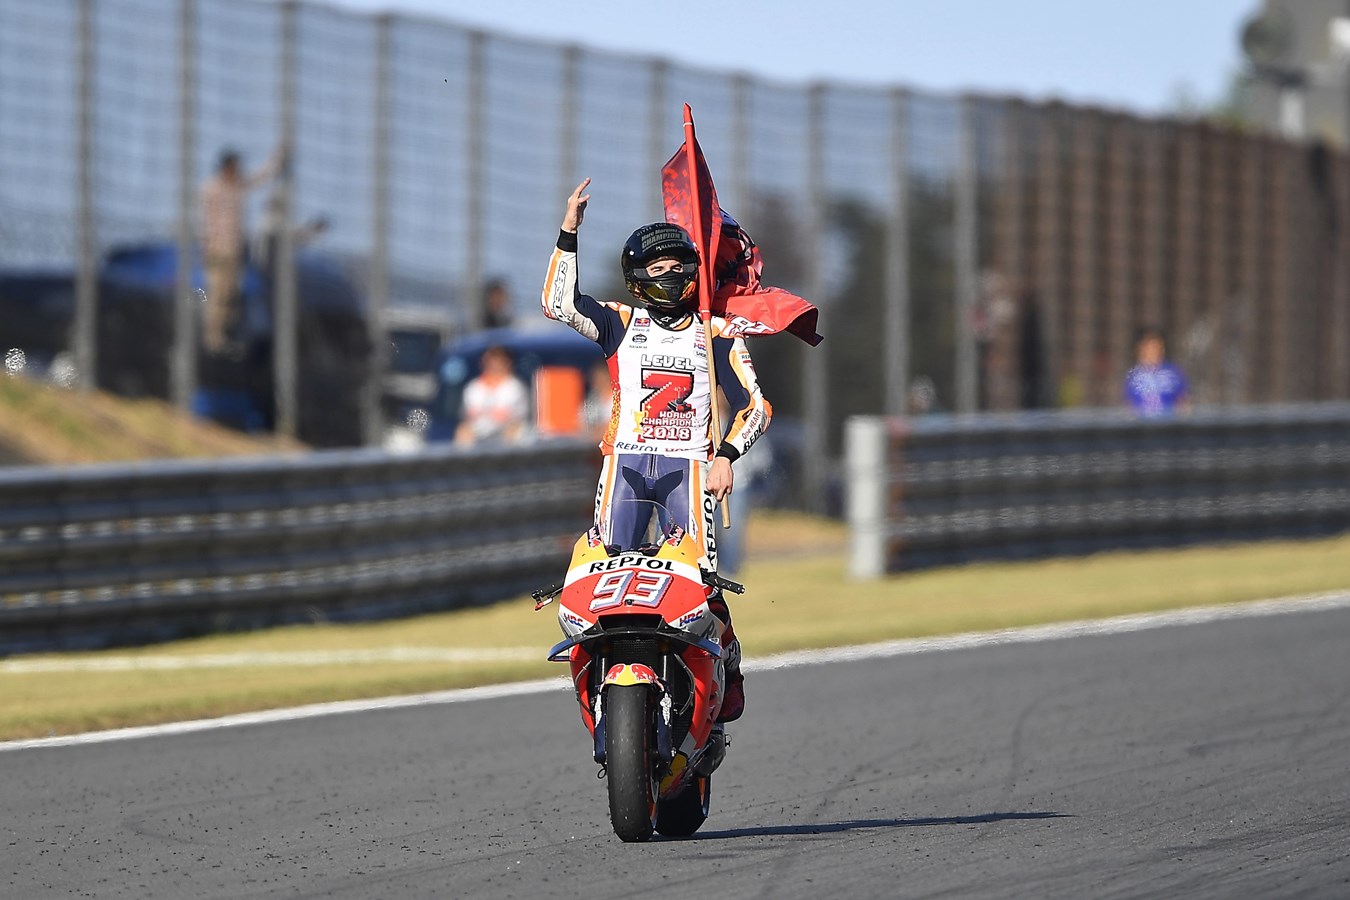 Magic Marquez Wins at Motegi Wins to Take Fifth MotoGP Crown